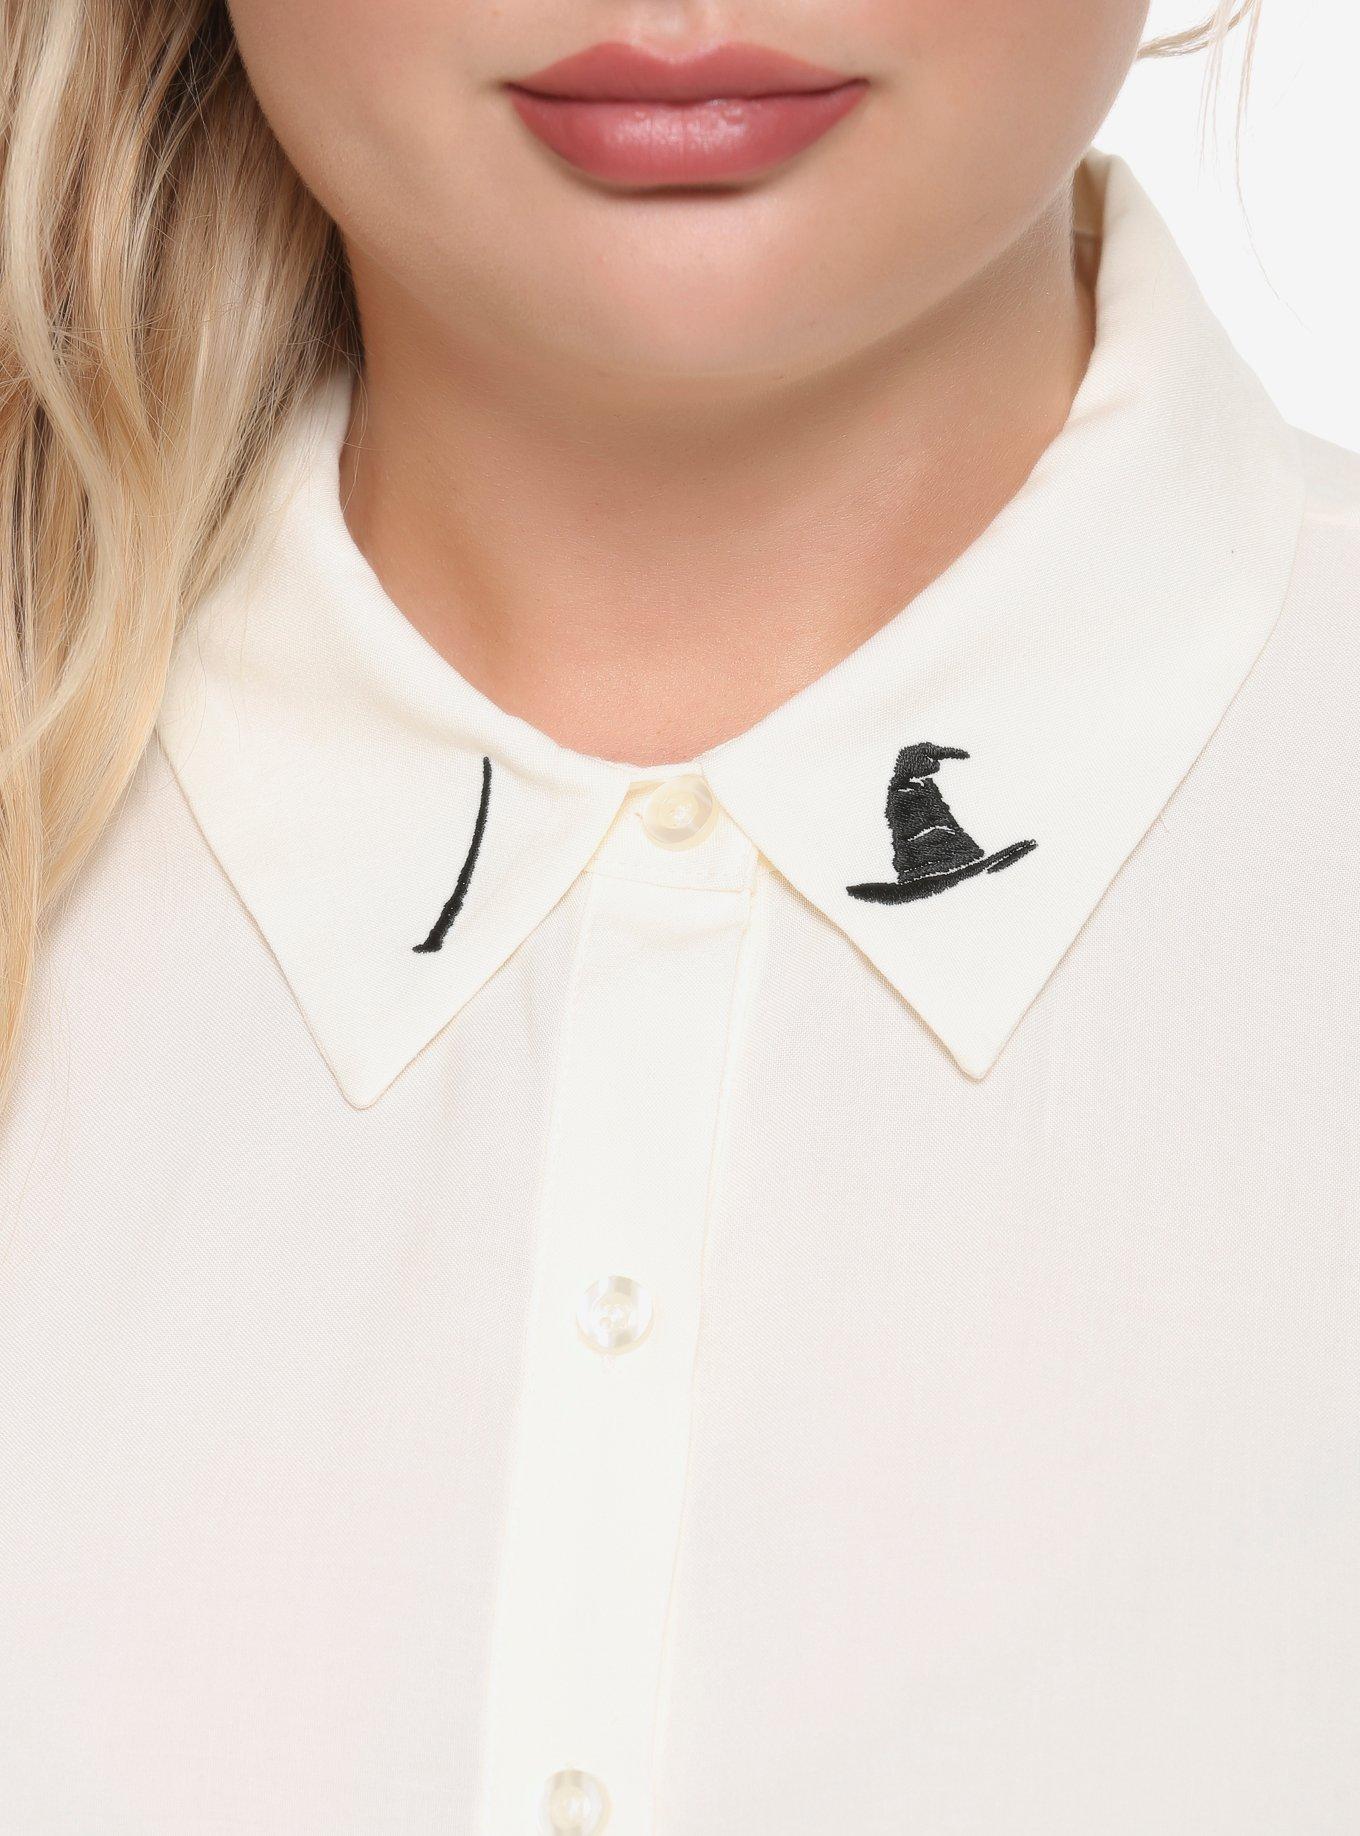 Harry Potter Cream Girls Woven Button-Up Plus Size, MULTI, alternate